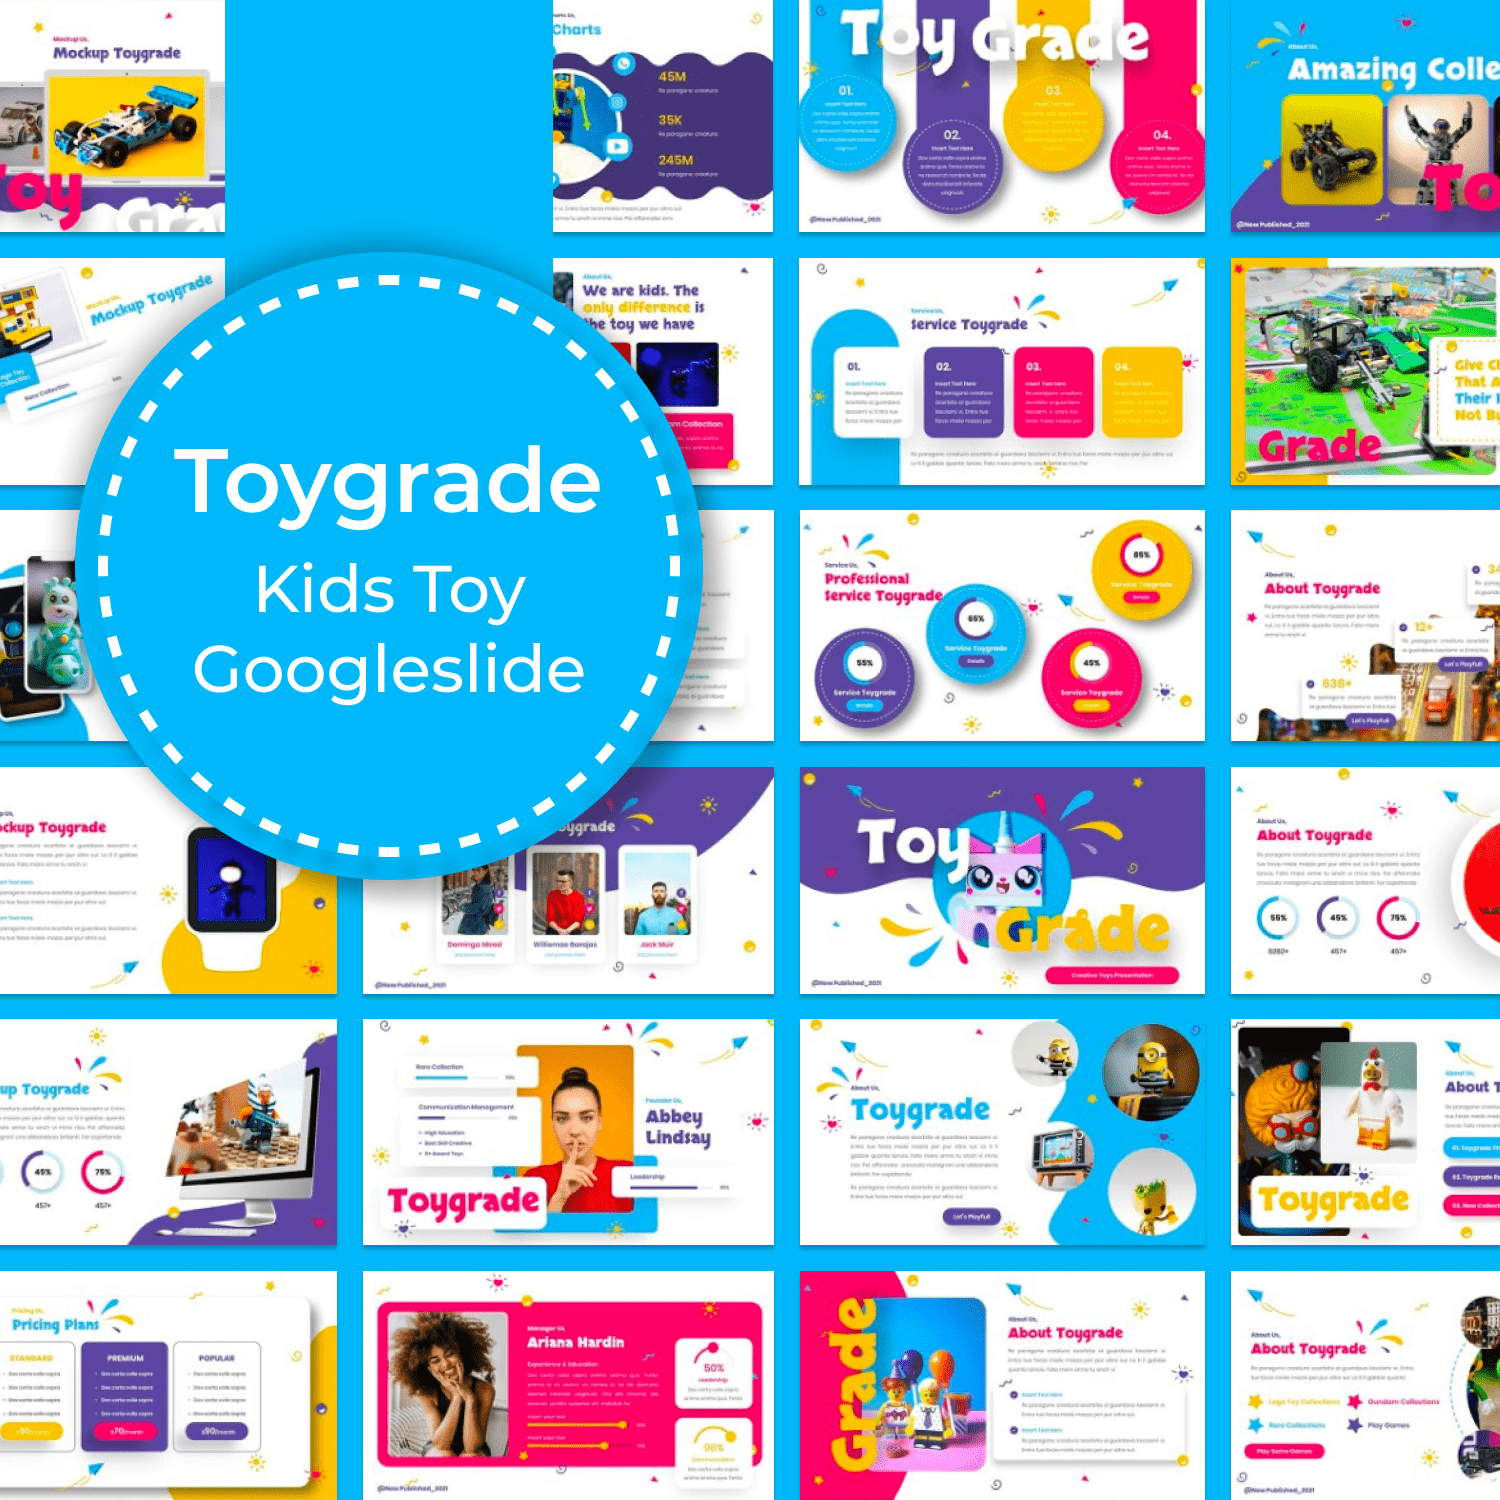 Toygrade - Kids Toy Googleslide cover.